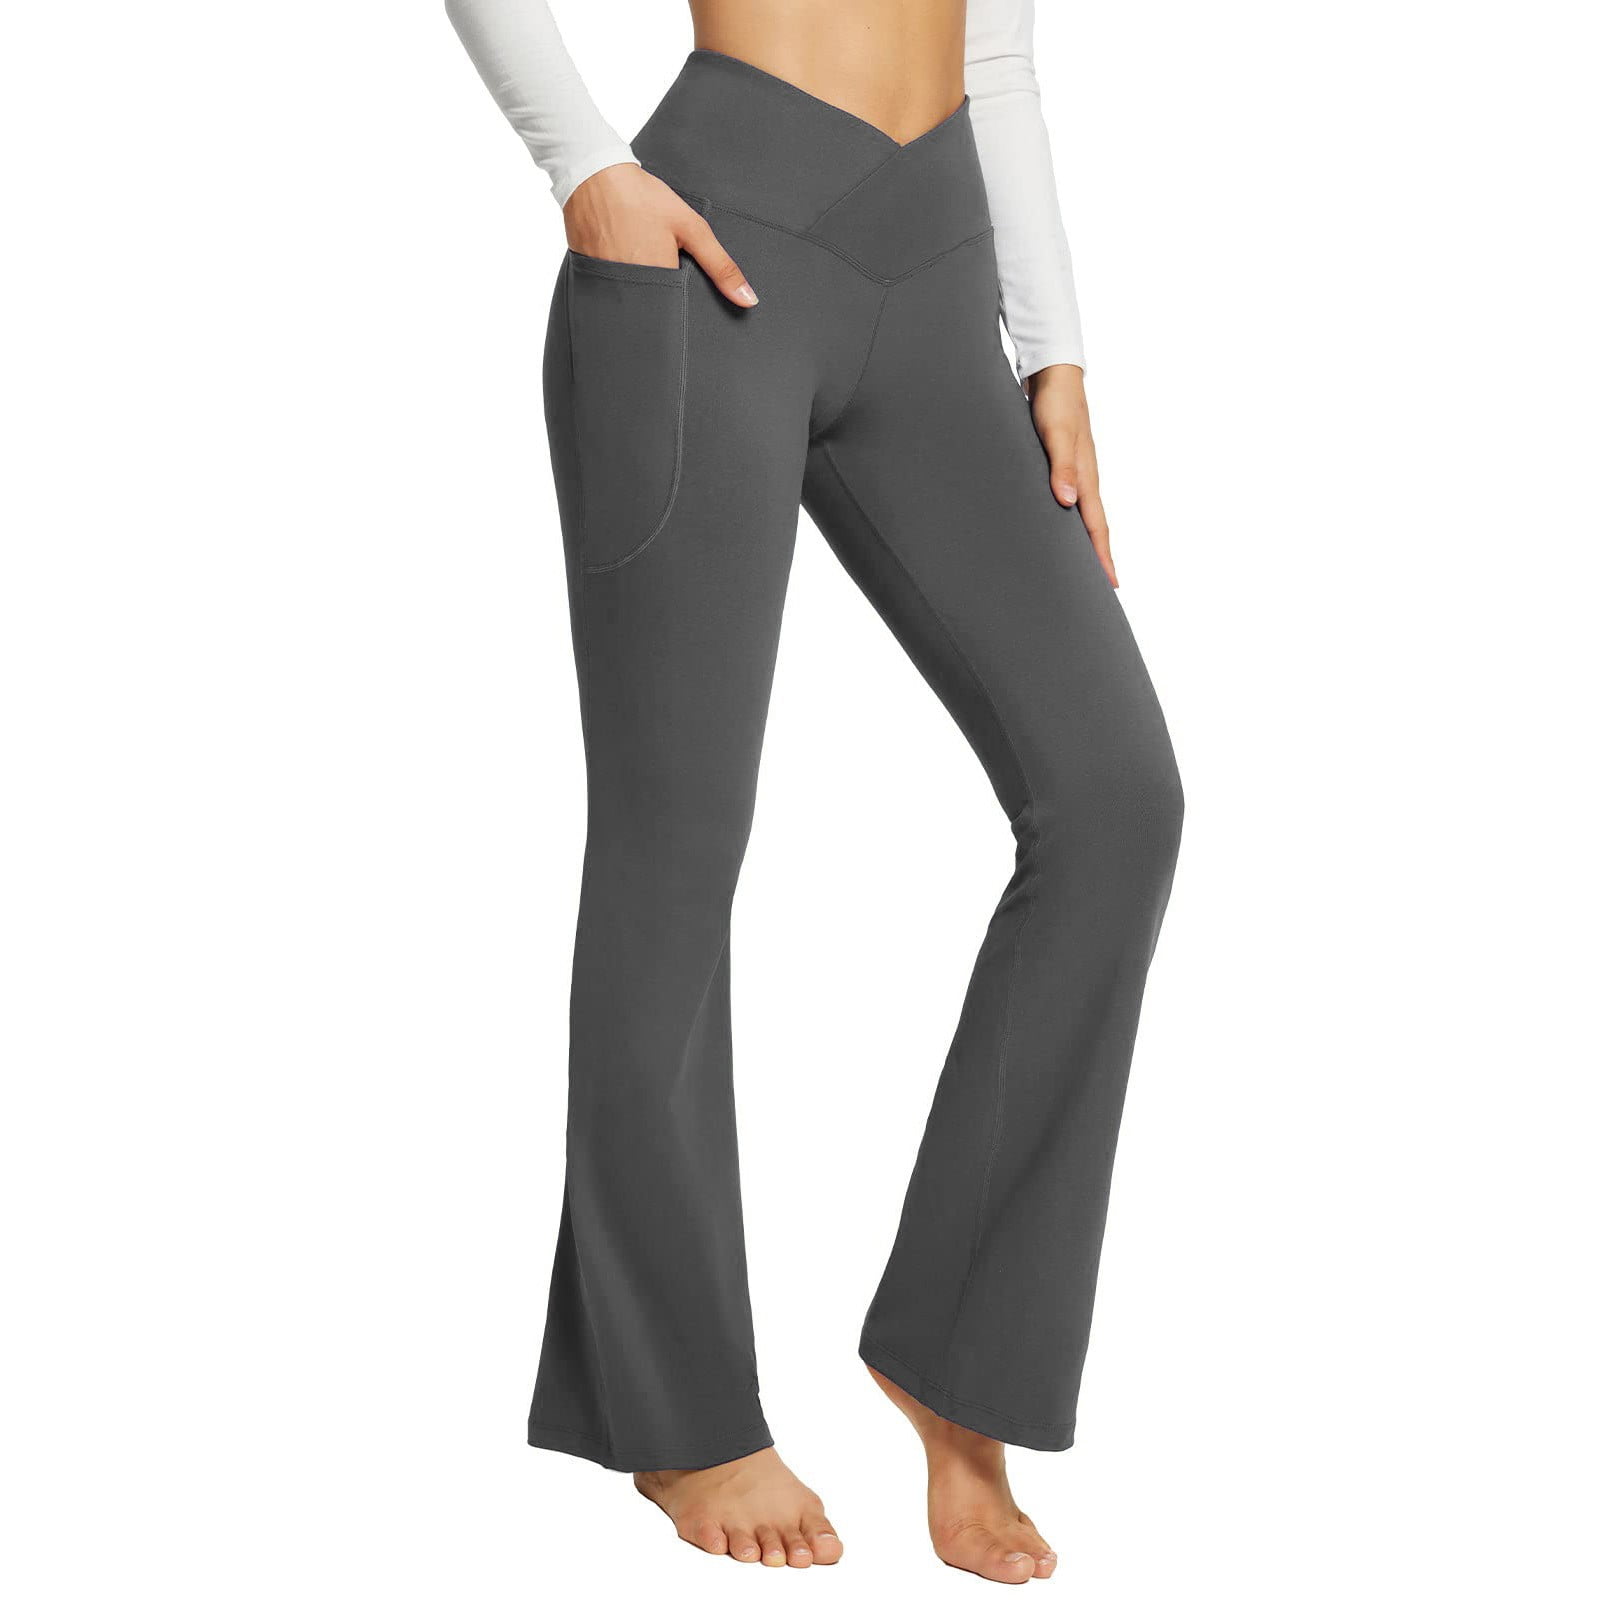 adviicd Petite Yoga Pants For Women Plus Size Yoga Pants For Women